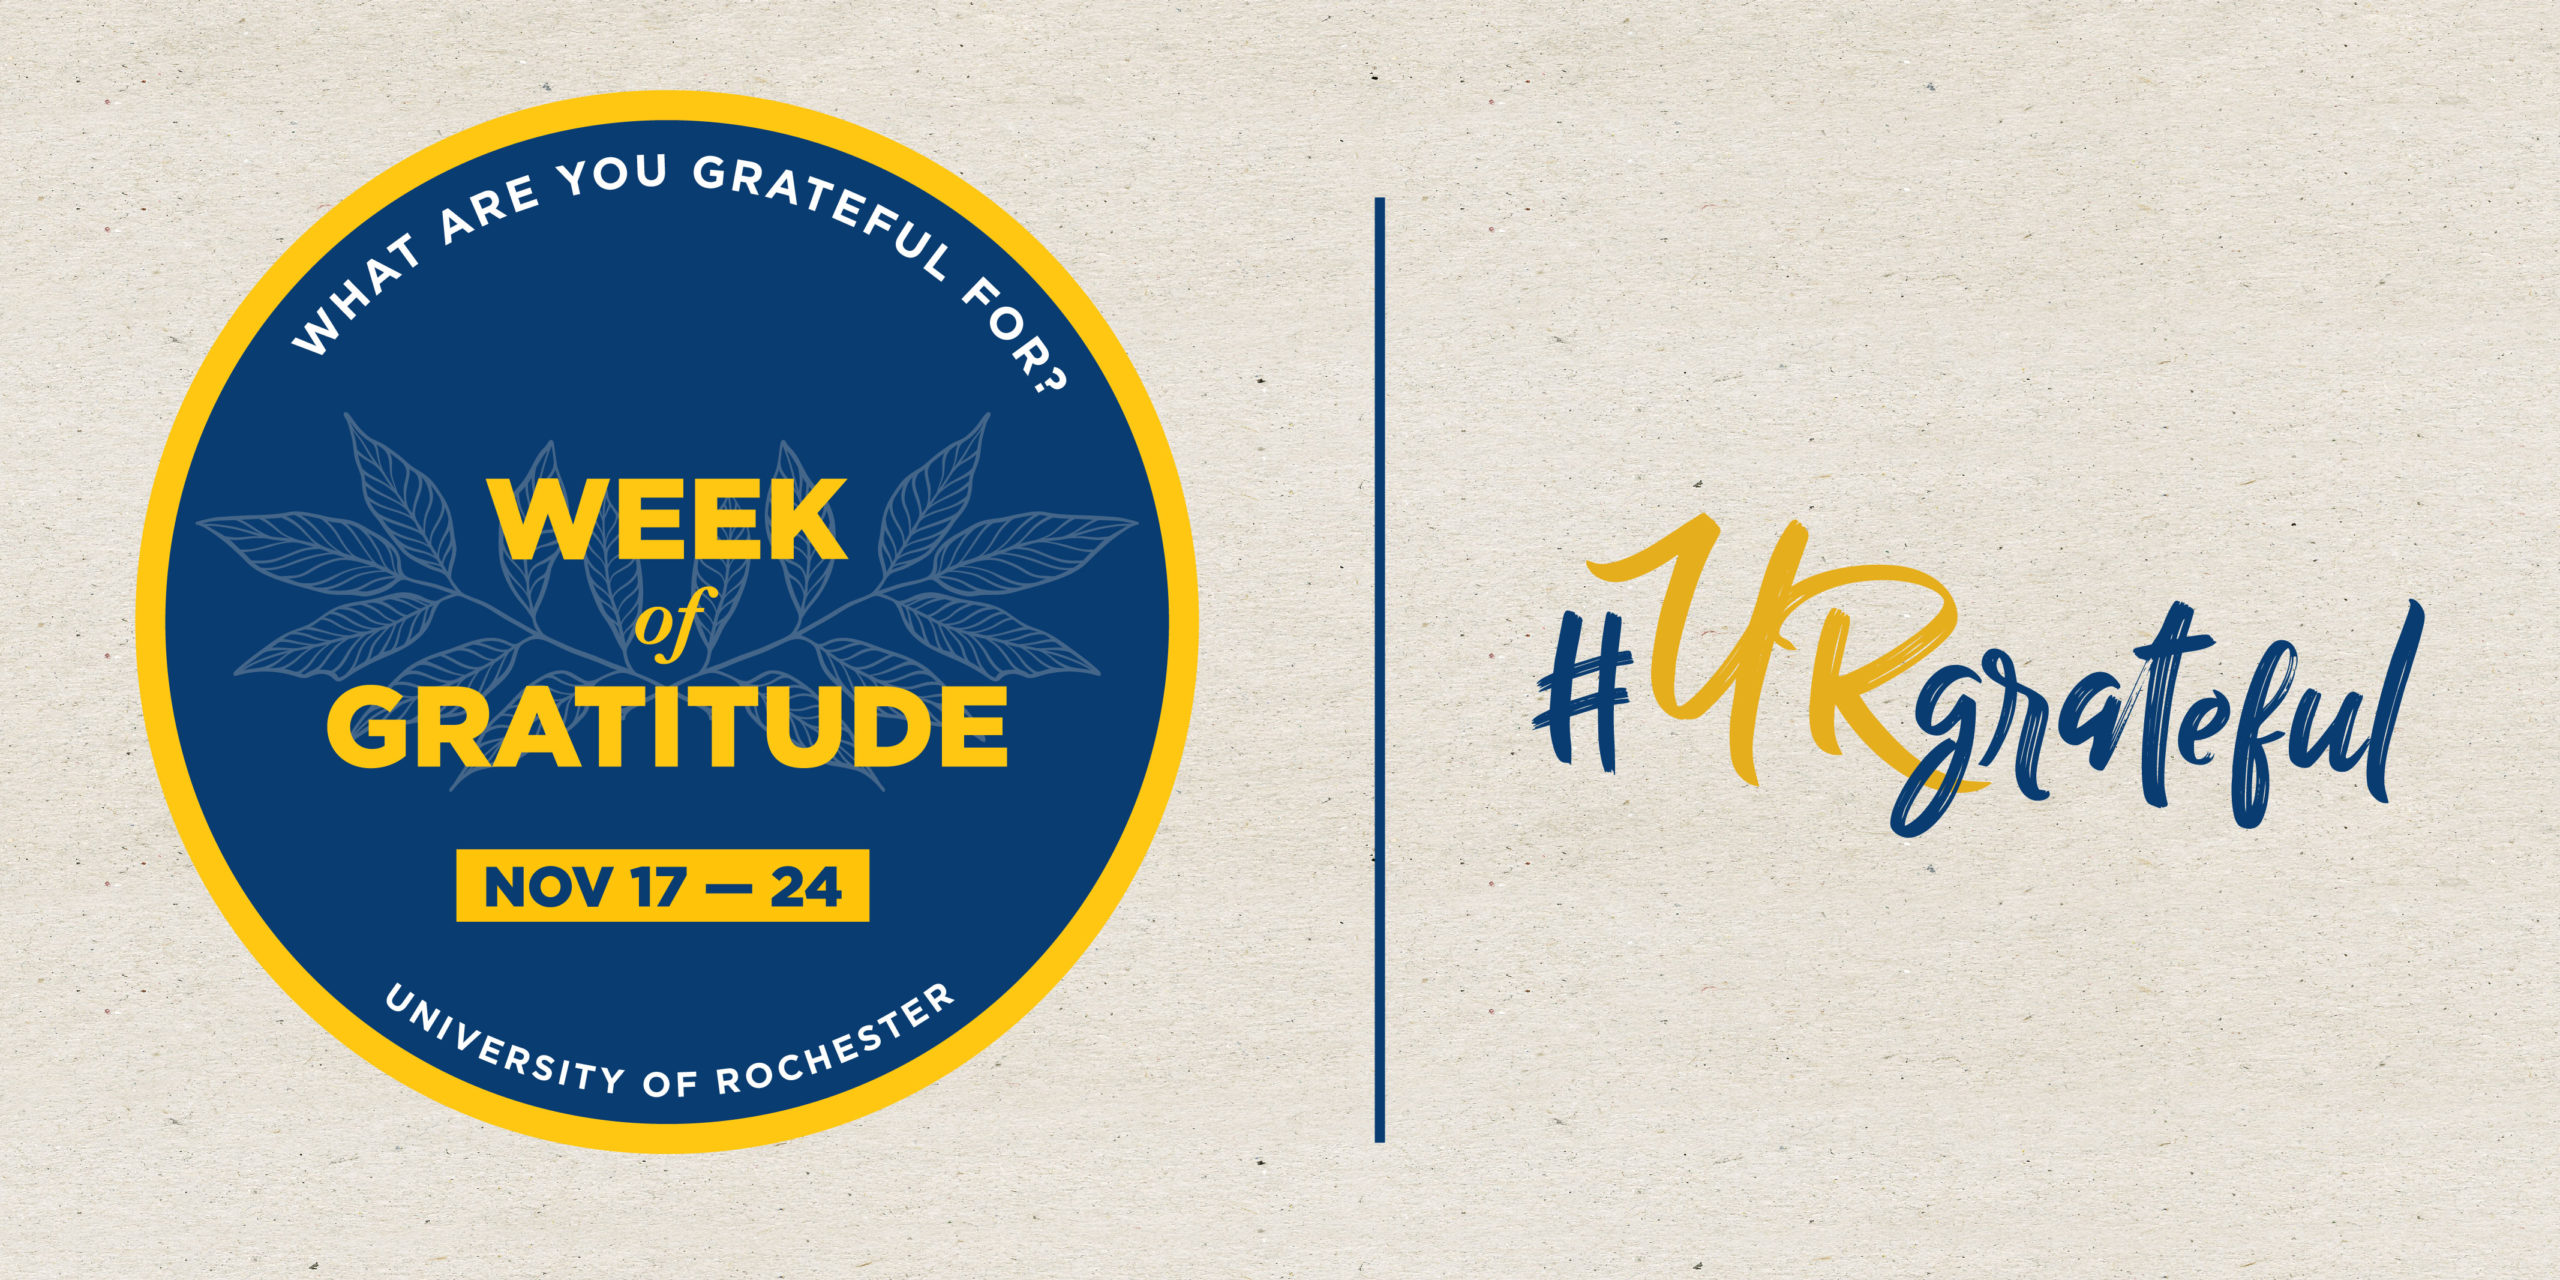 Week of gratitude badge - november 17 - 24 #UR grateful